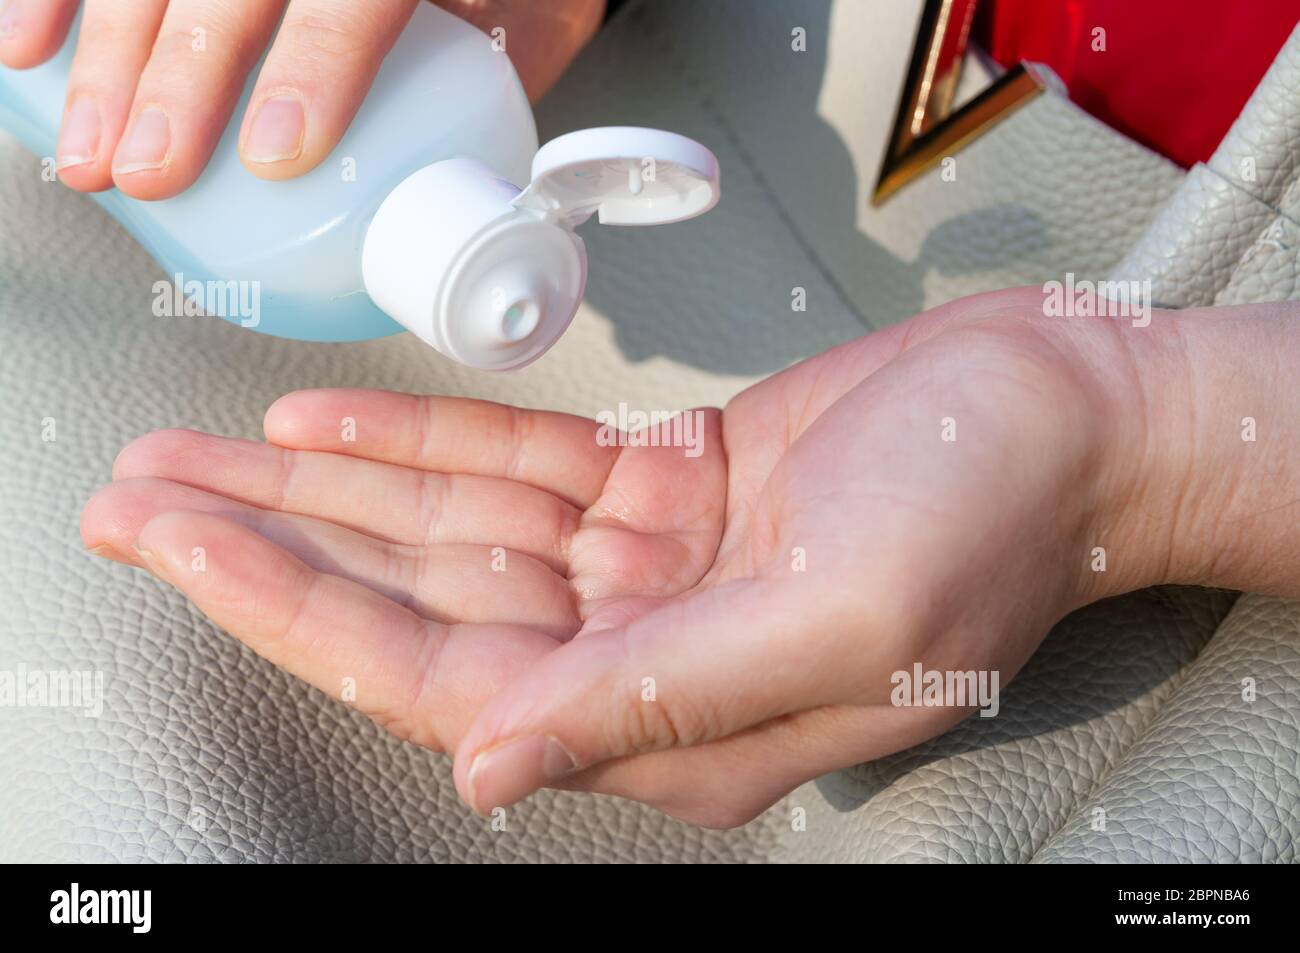 Women's hands using wash hand sanitizer gel. Stock Photo